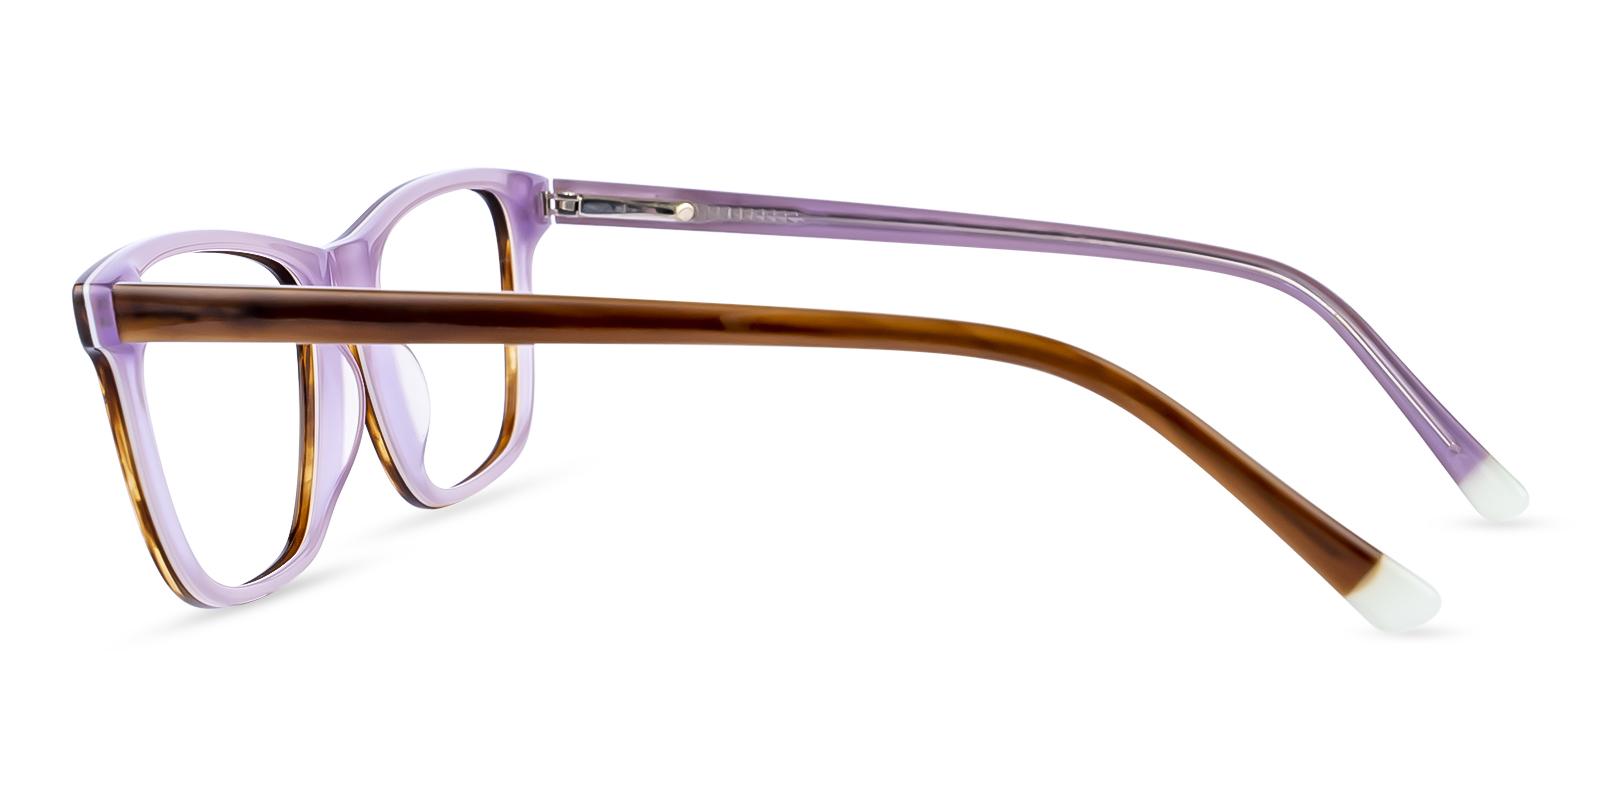 Gilcres Brown Acetate Eyeglasses , SpringHinges , UniversalBridgeFit Frames from ABBE Glasses